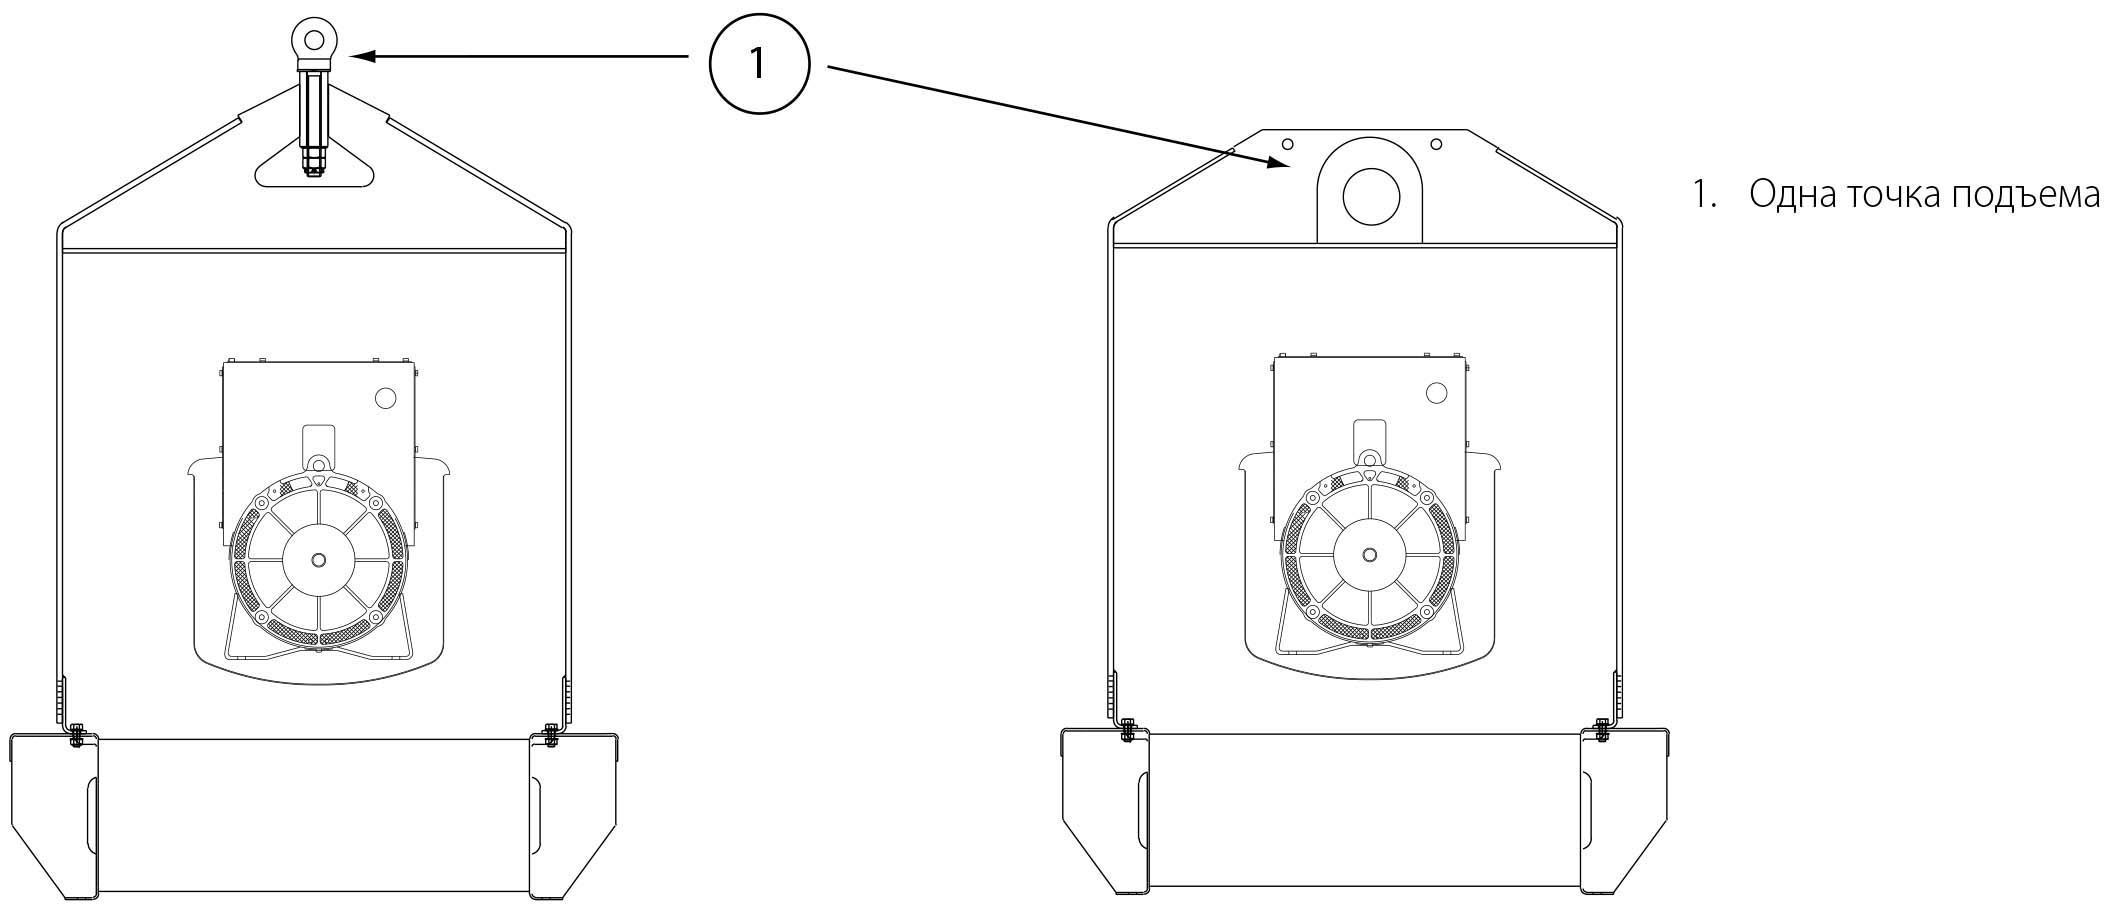 Электрогенератор - пример подъёма за одна точку